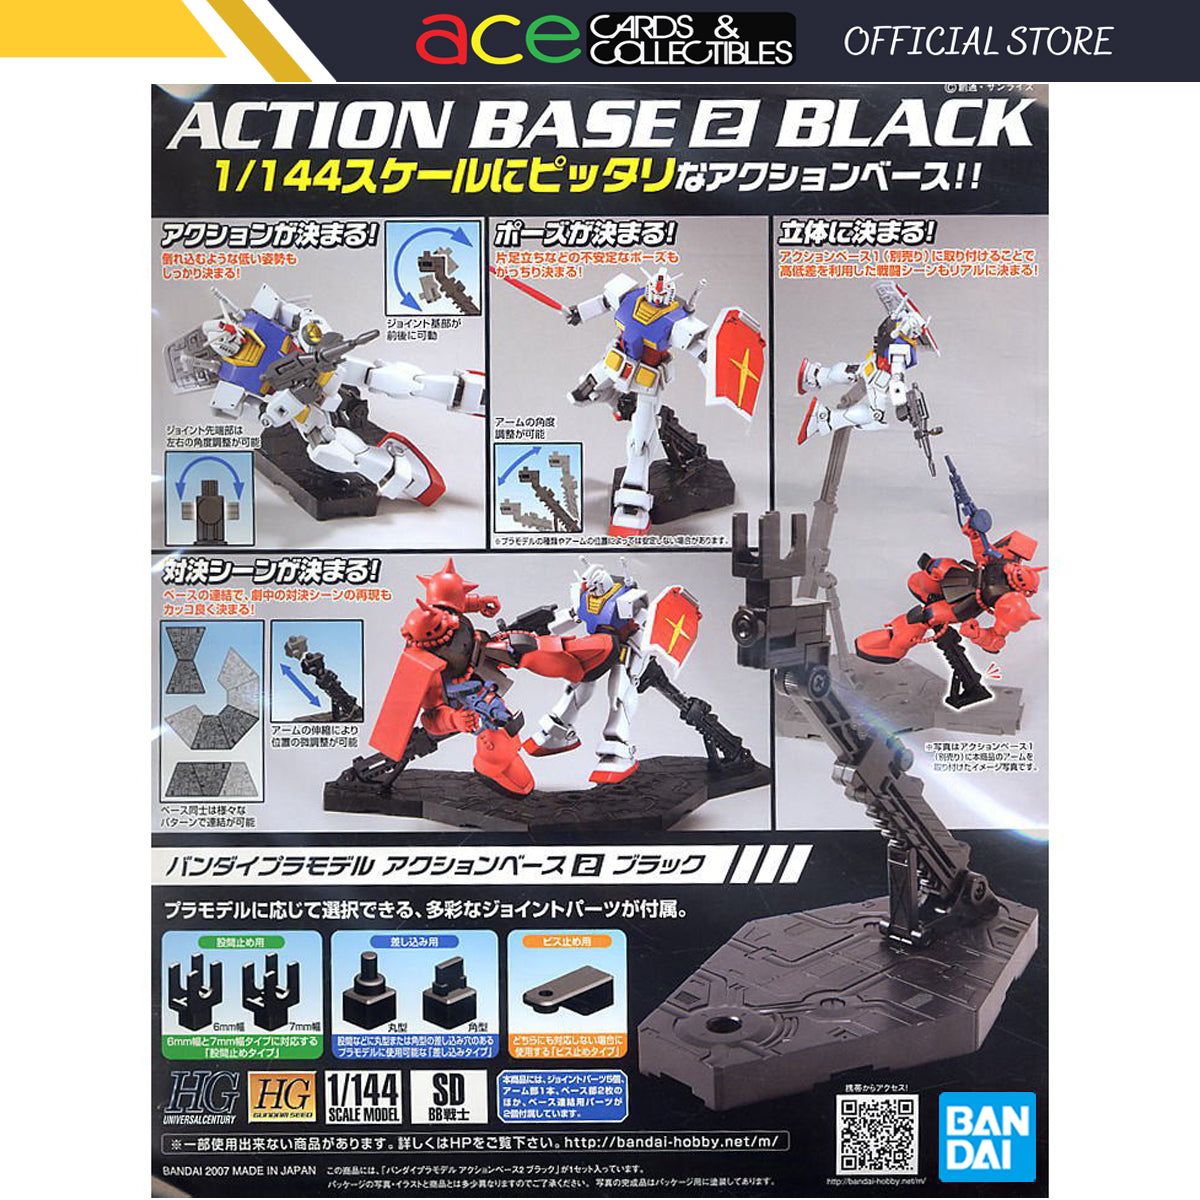 Gunpla 1/100 Action Base 2 Black-Bandai-Ace Cards & Collectibles